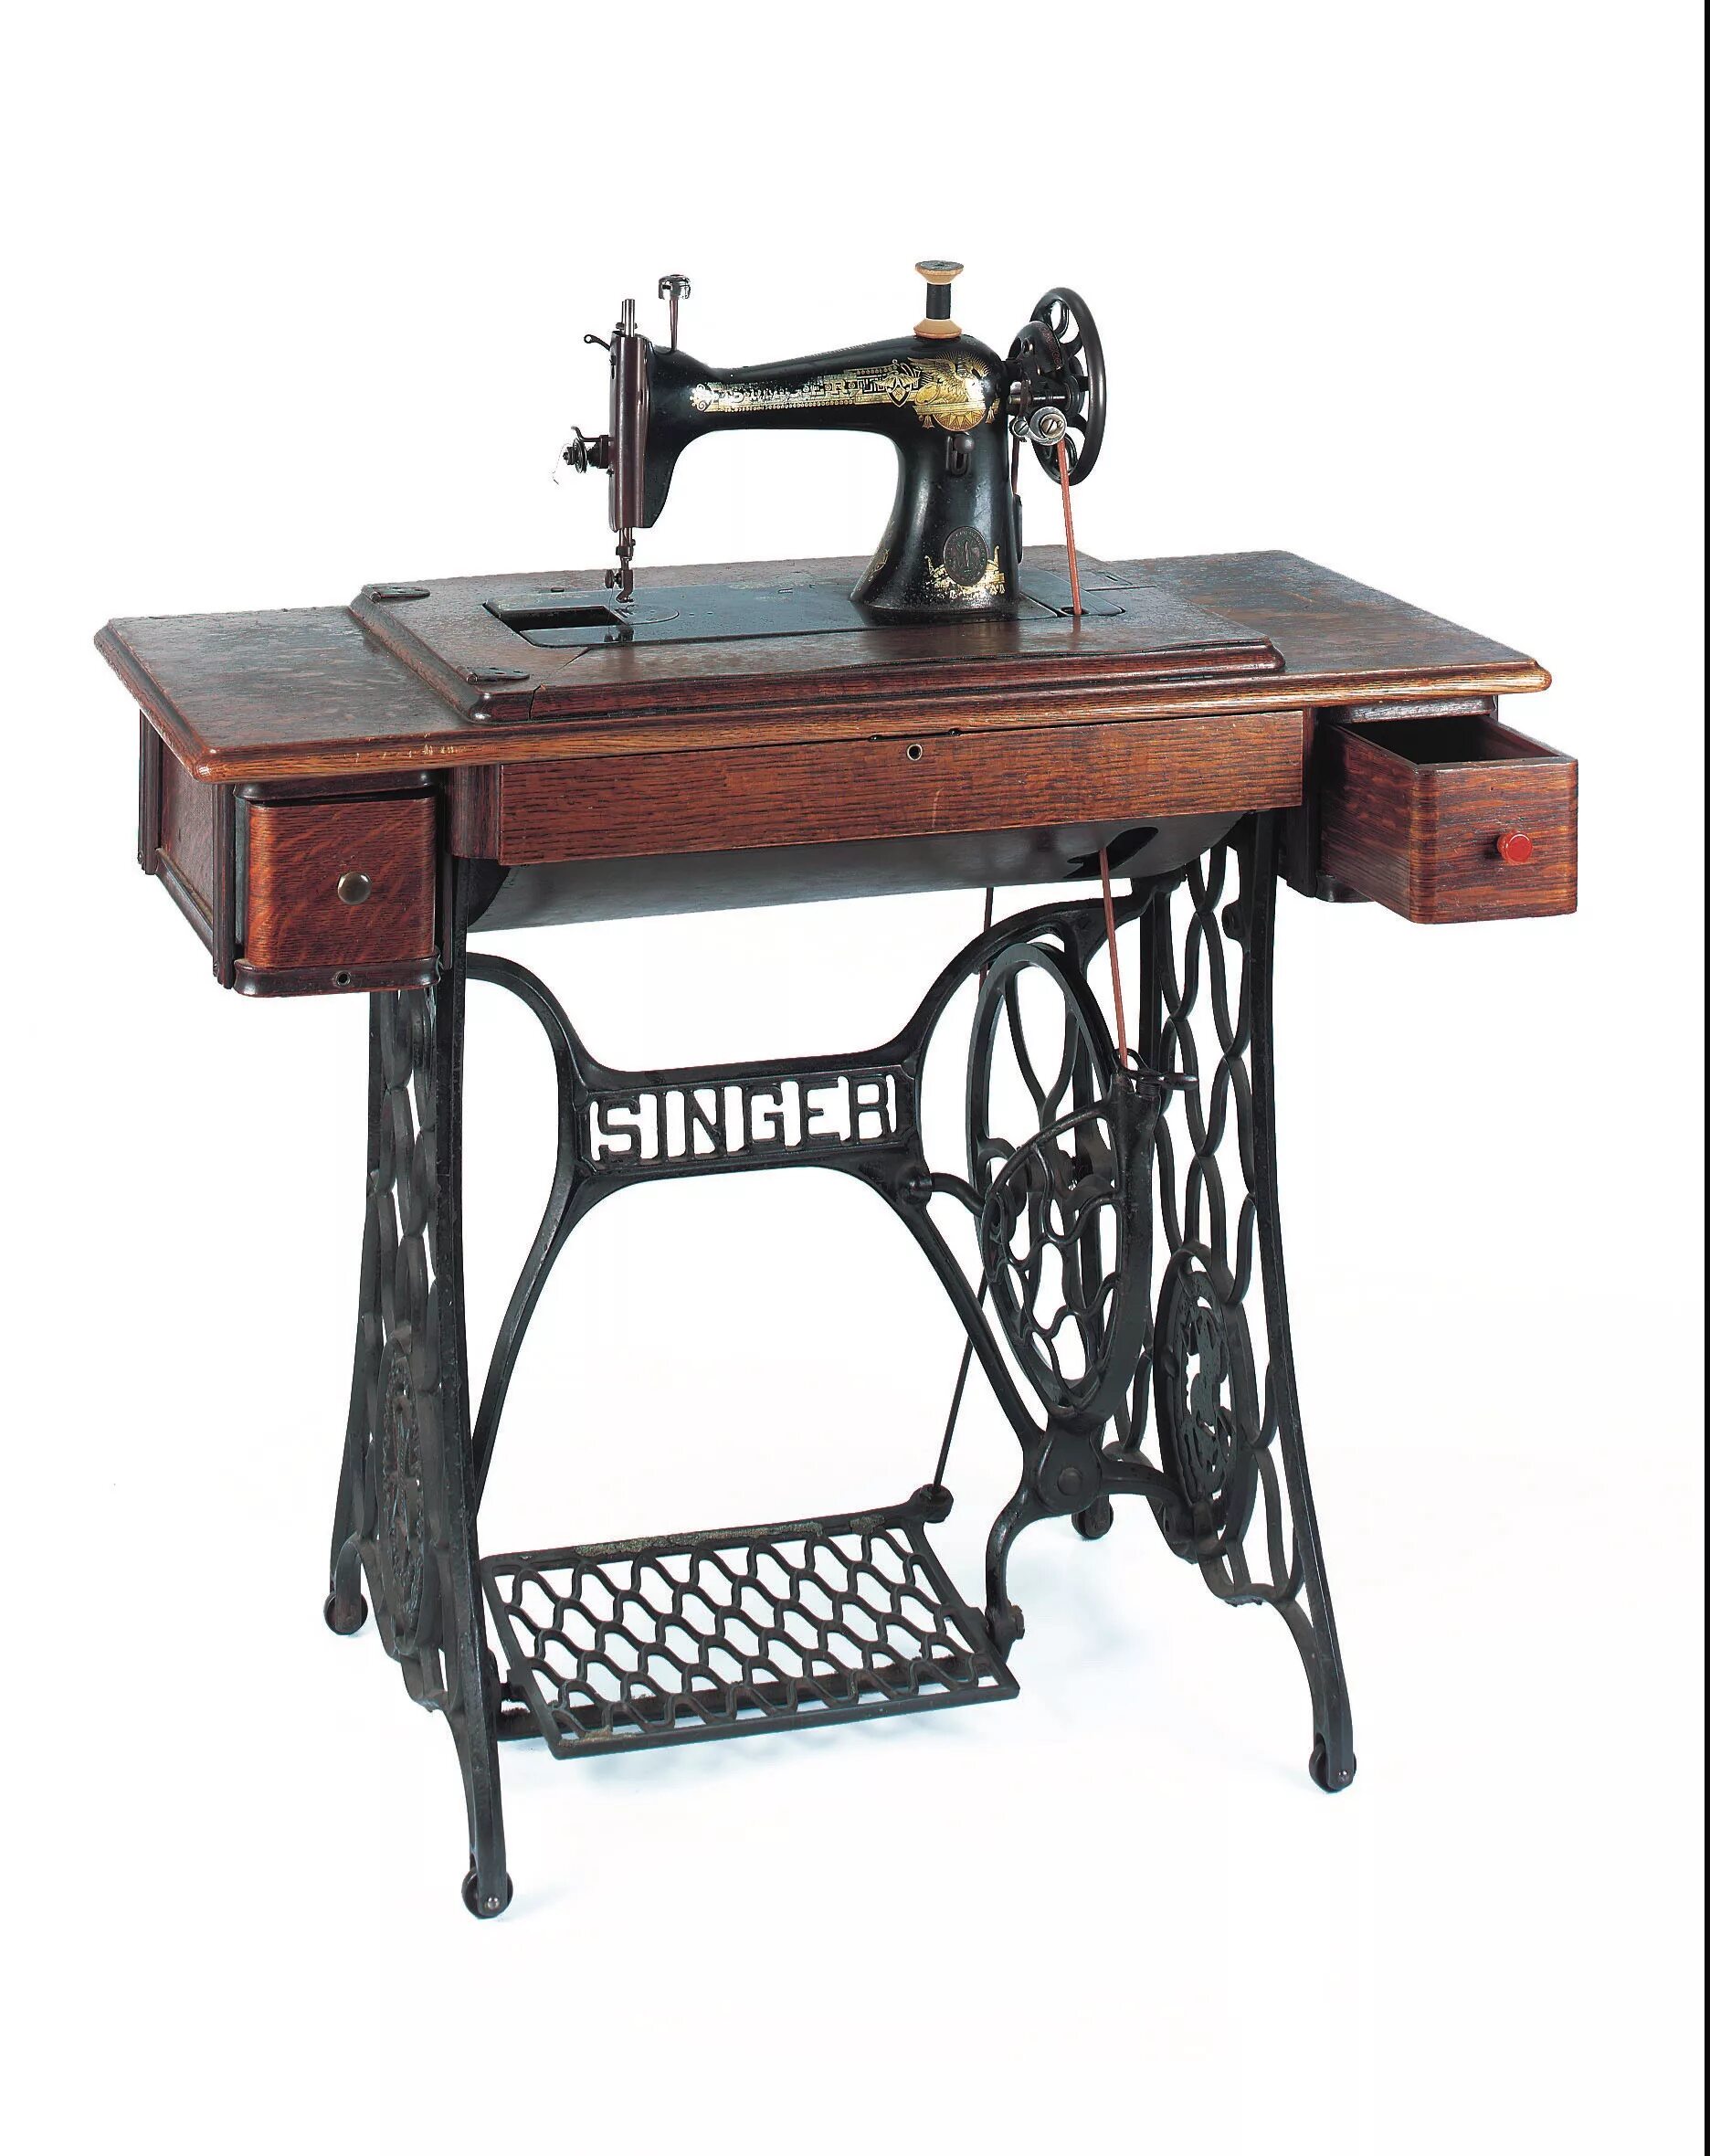 Швейная машинка tendenza. Швейная машинка Зингер ретро. Швейная машинка Зингер 18 века. Швейная машинка Зингер 2250.